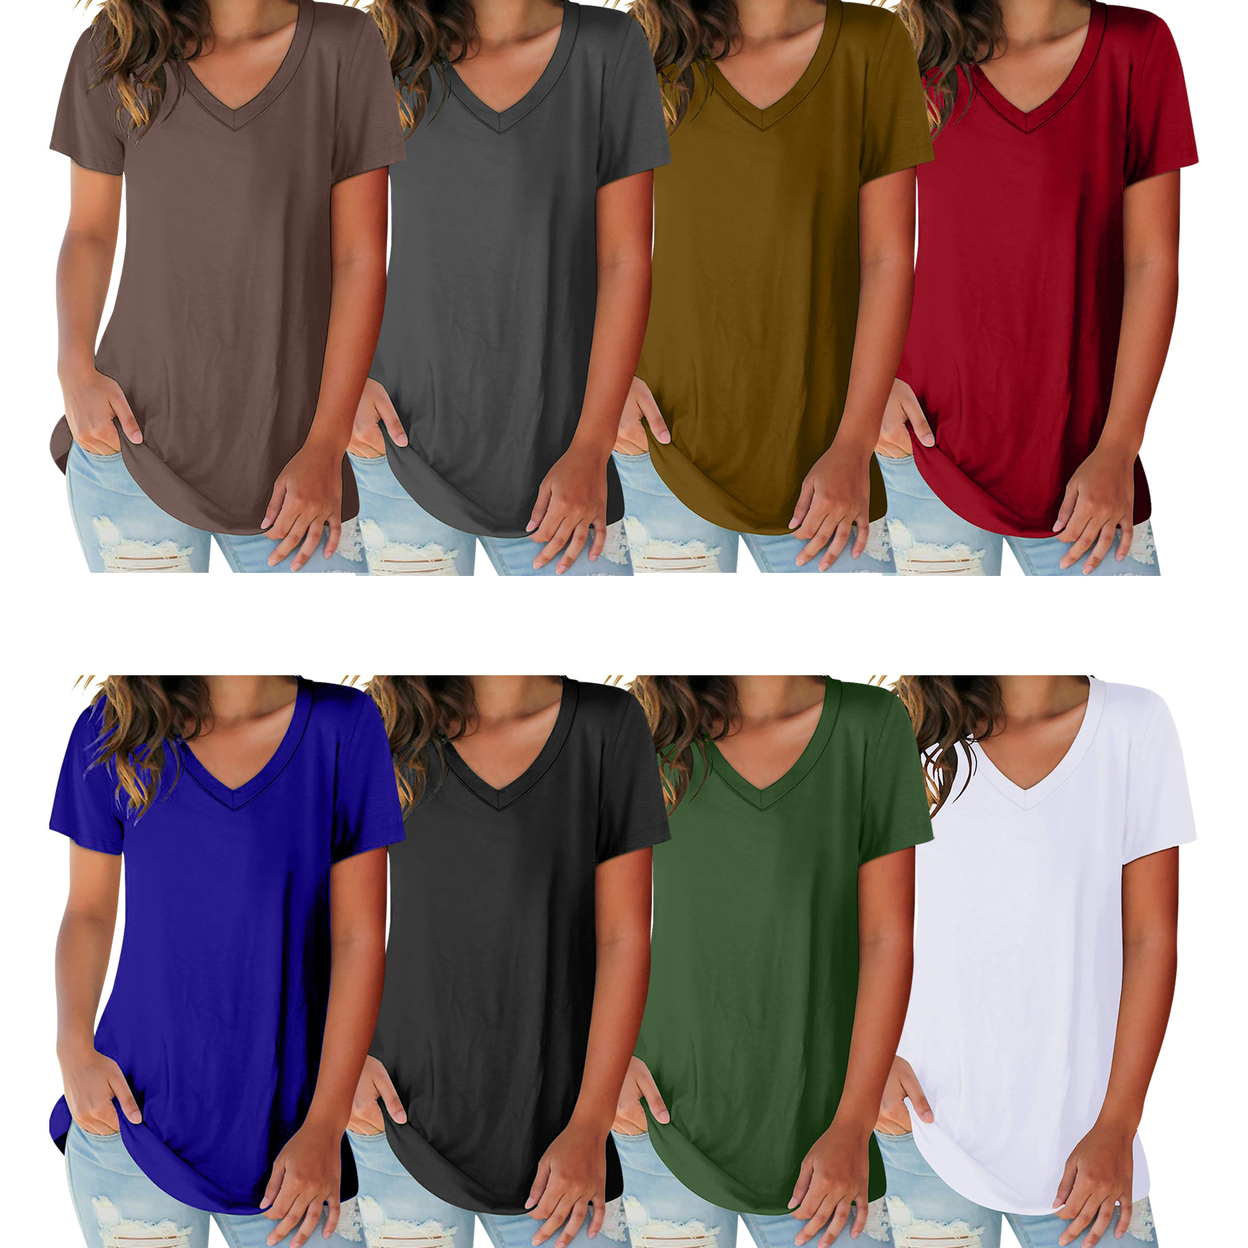 2-Pack: Women's Ultra Soft Smooth Cotton Blend Basic V-Neck Short Sleeve Shirts - White & Green, Xx-large